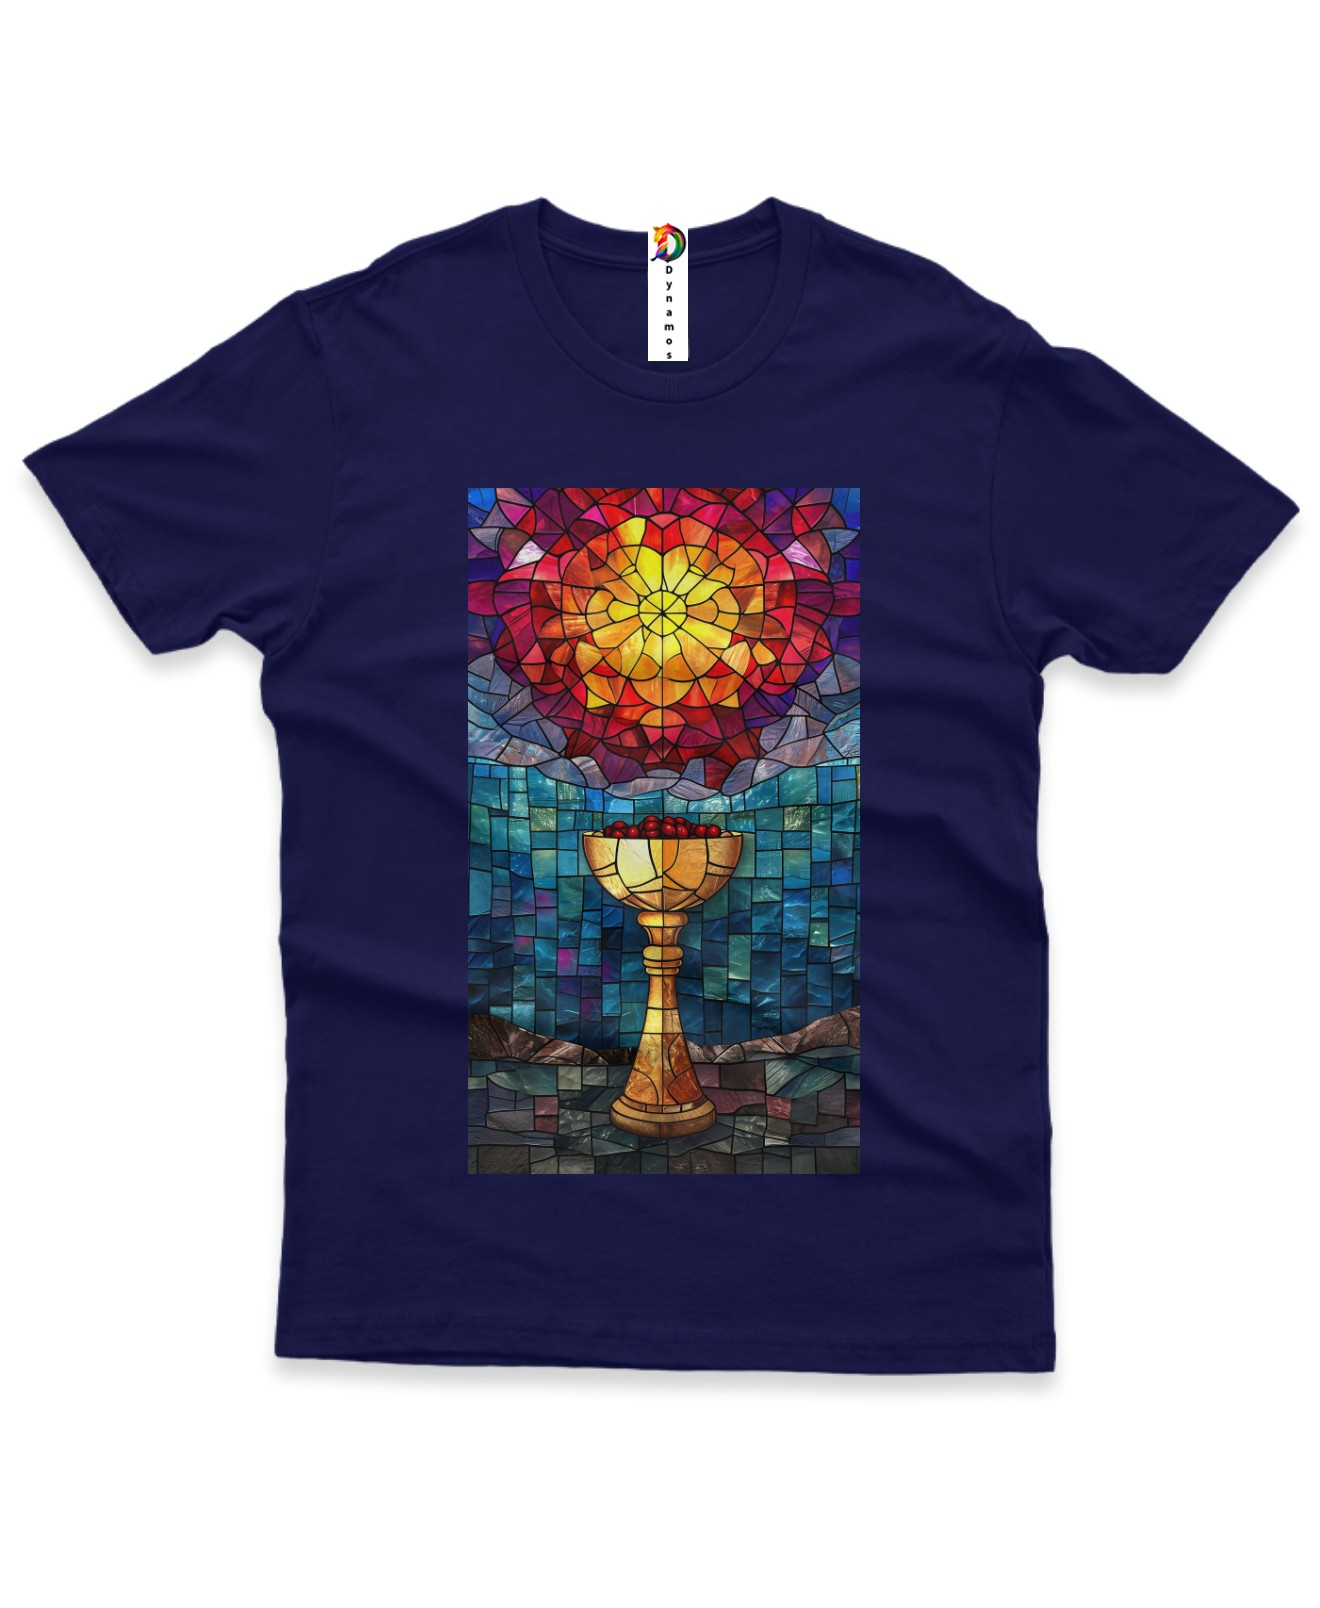 Camiseta Ezequias Masc - Santo Graal - Algodão Pima